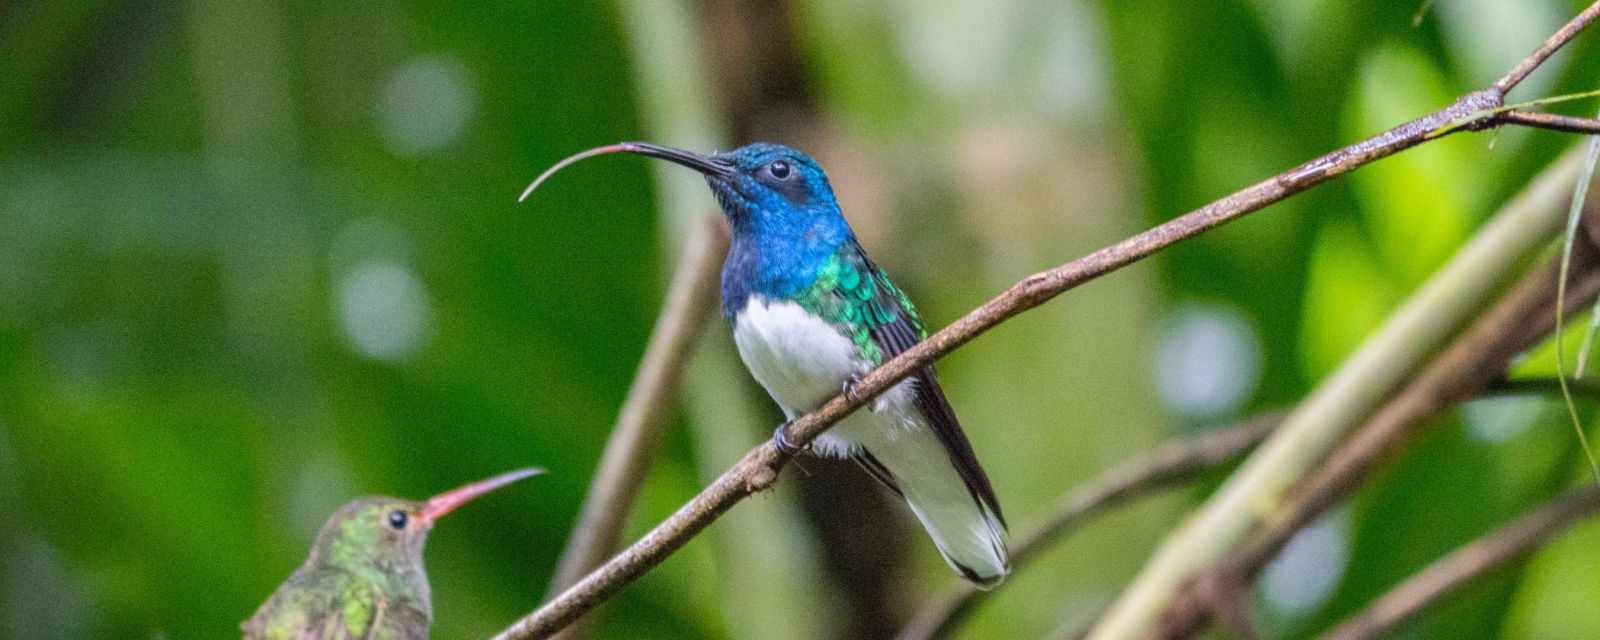 Bird Watching in Mindo - Ecuador